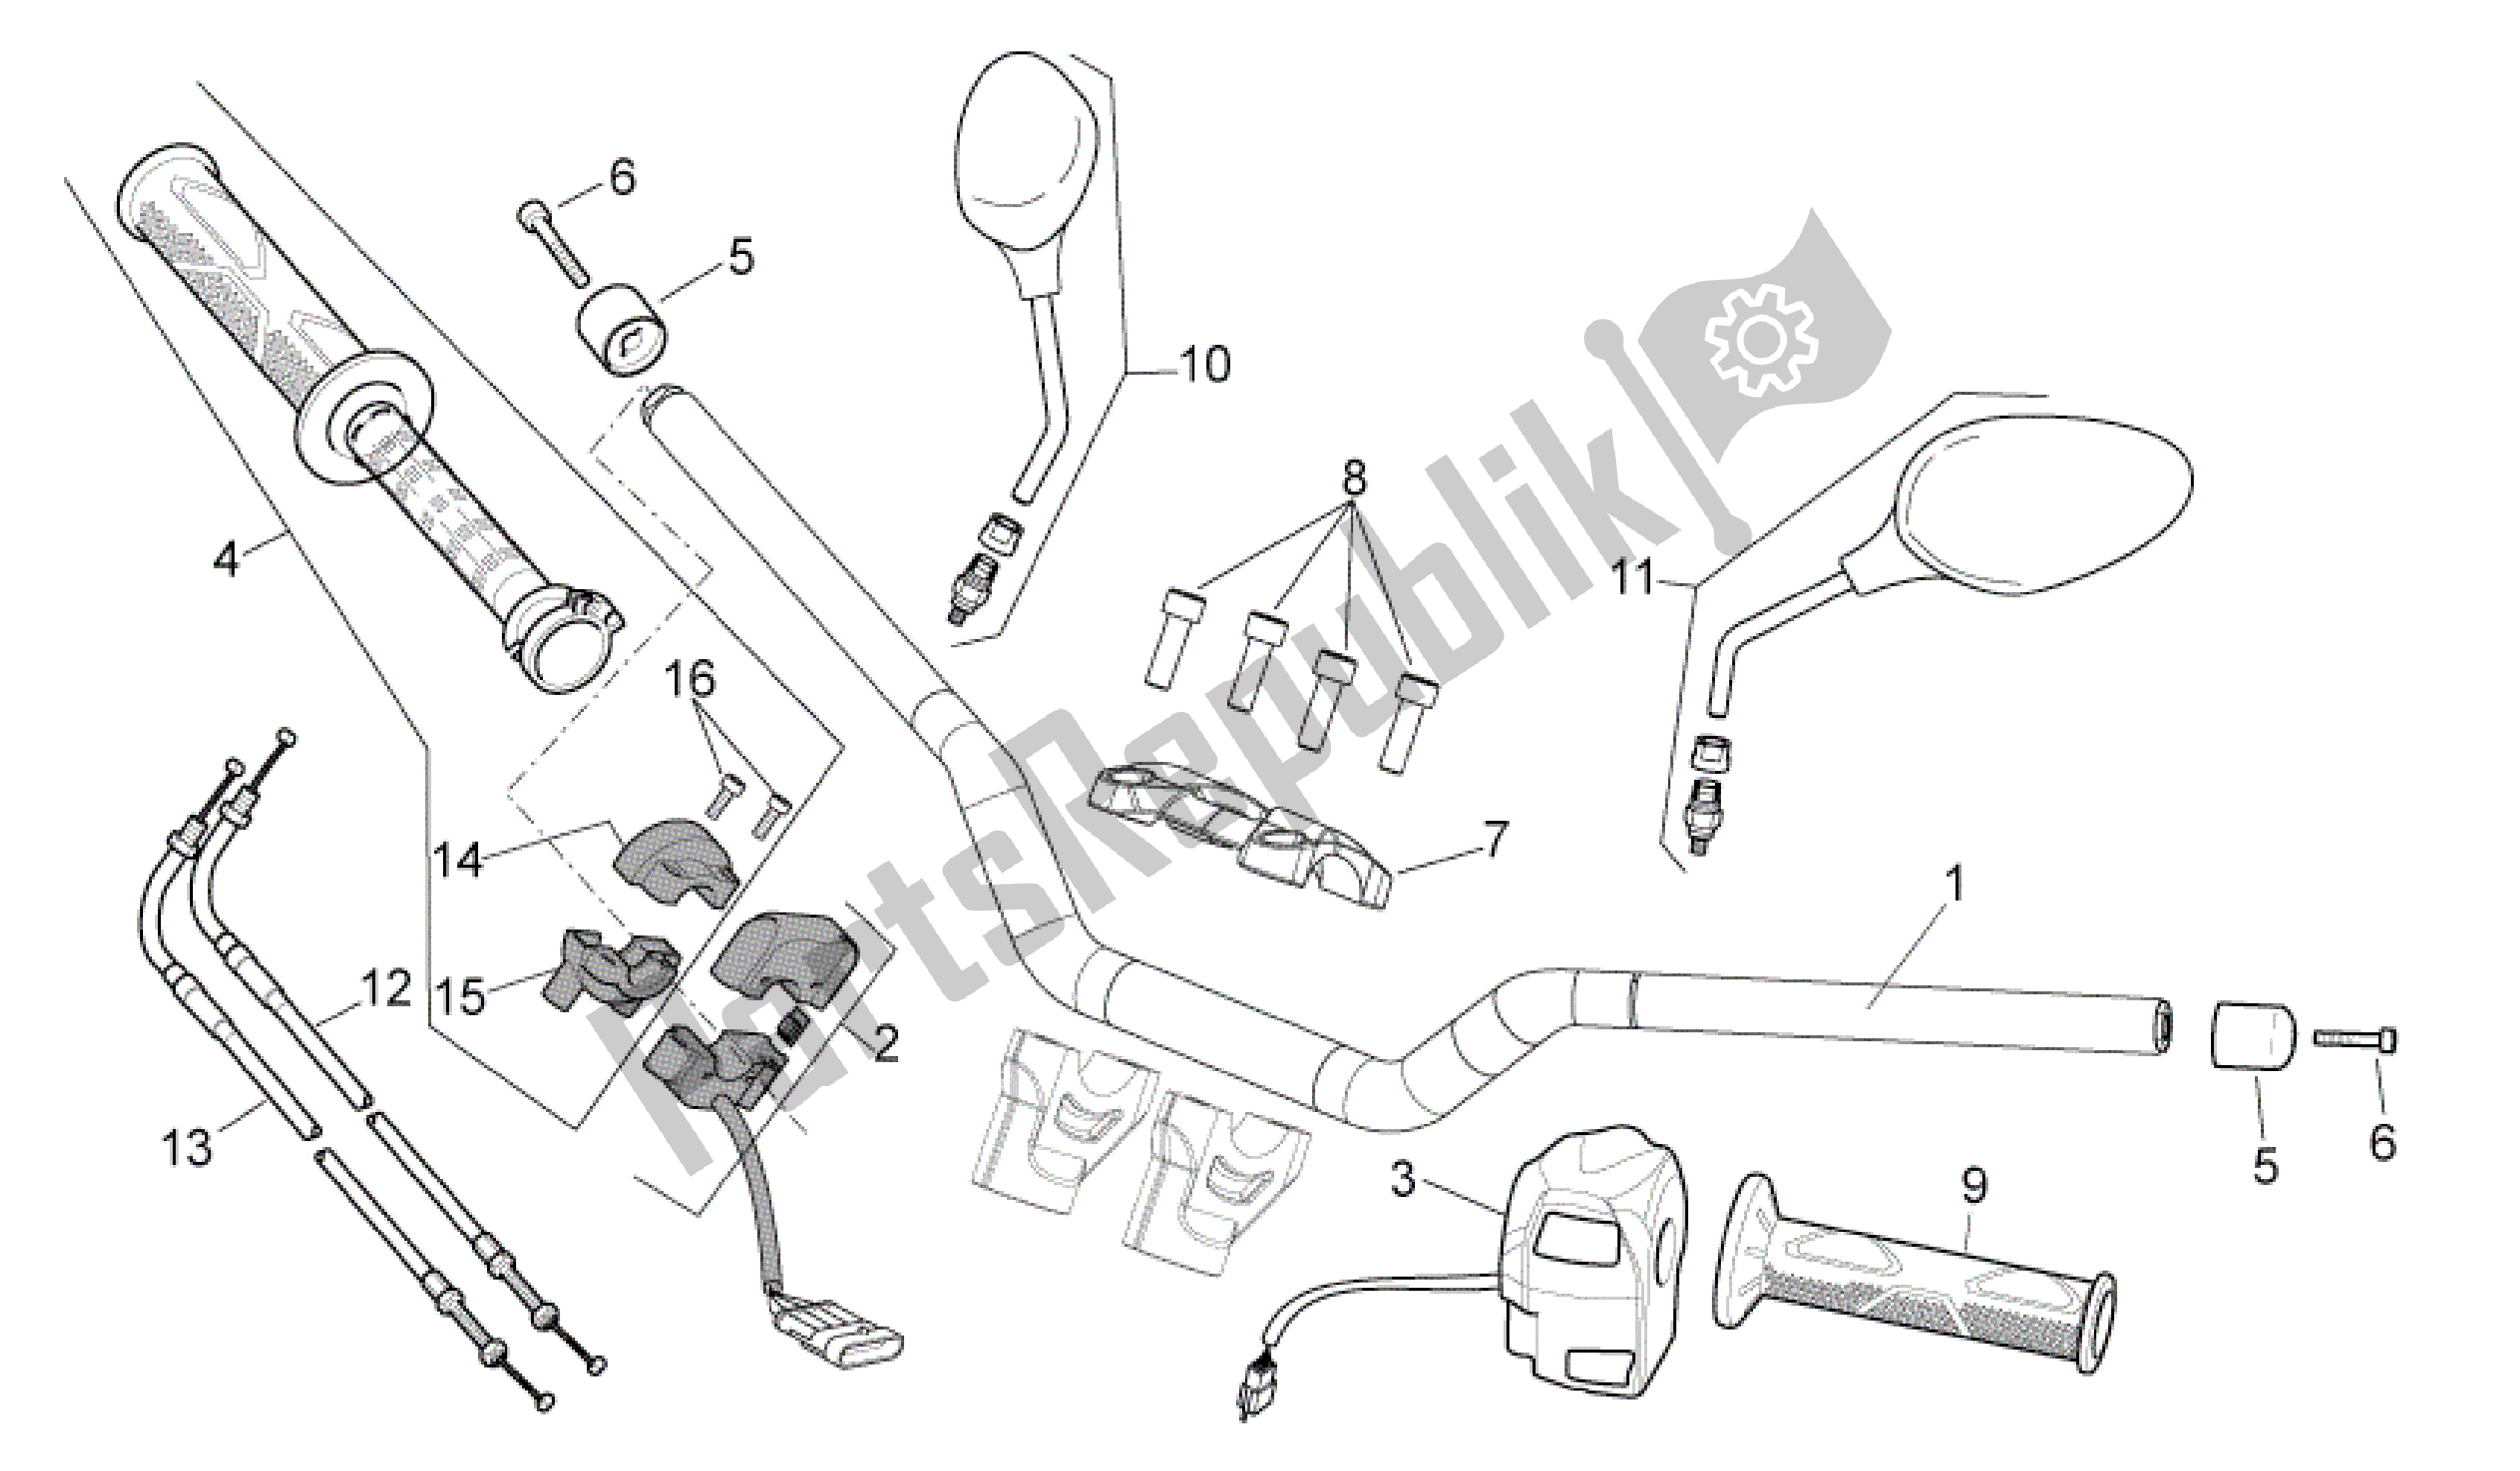 Todas las partes para Manillar - Controles de Aprilia Shiver 750 2011 - 2013